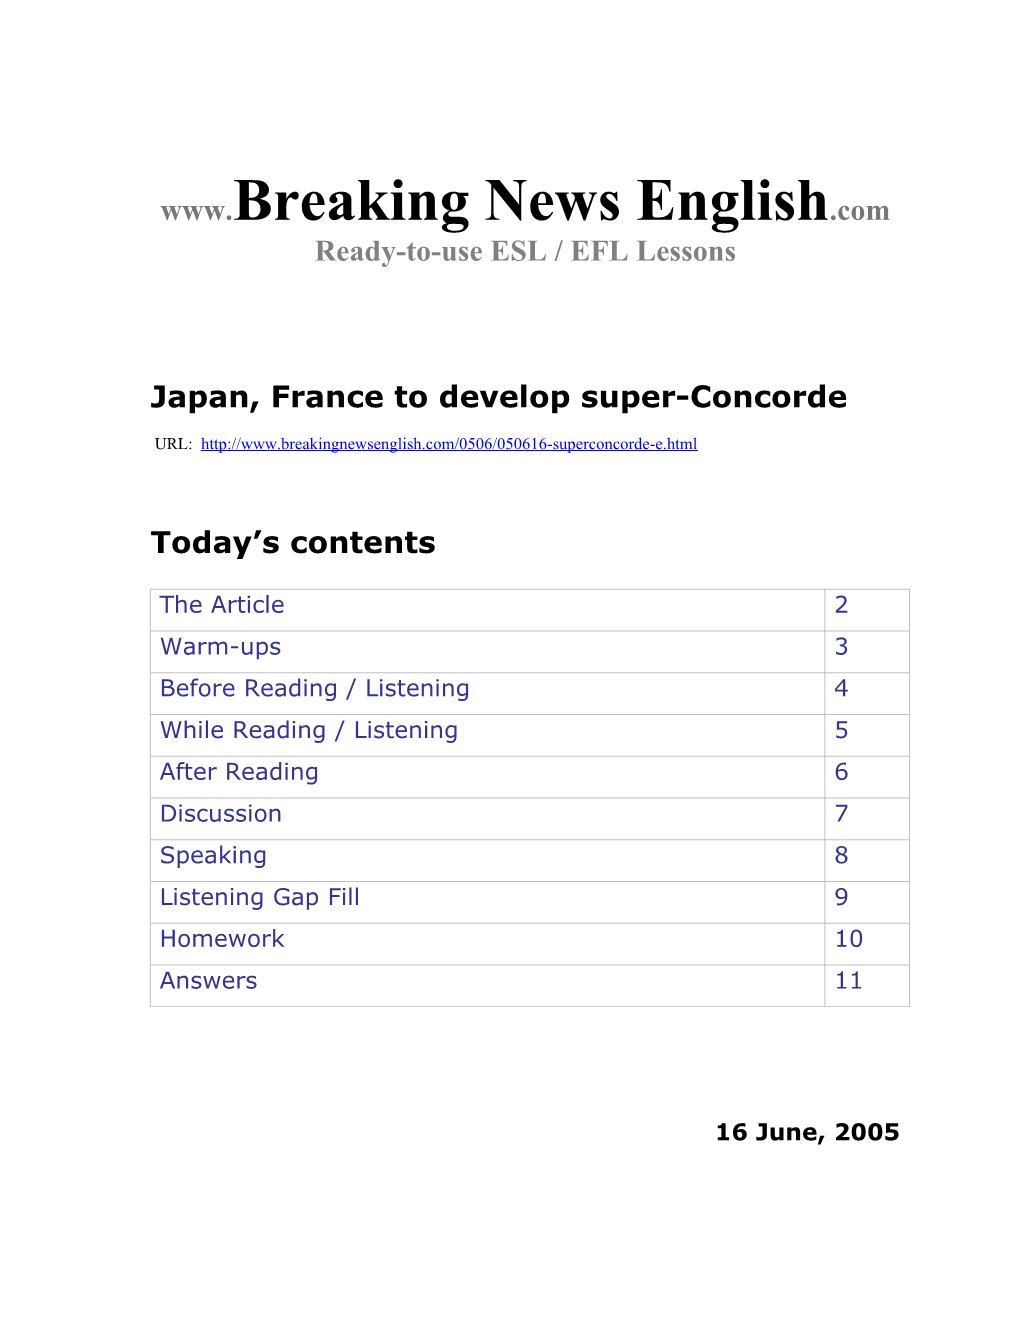 Japan, France to Develop Super-Concorde